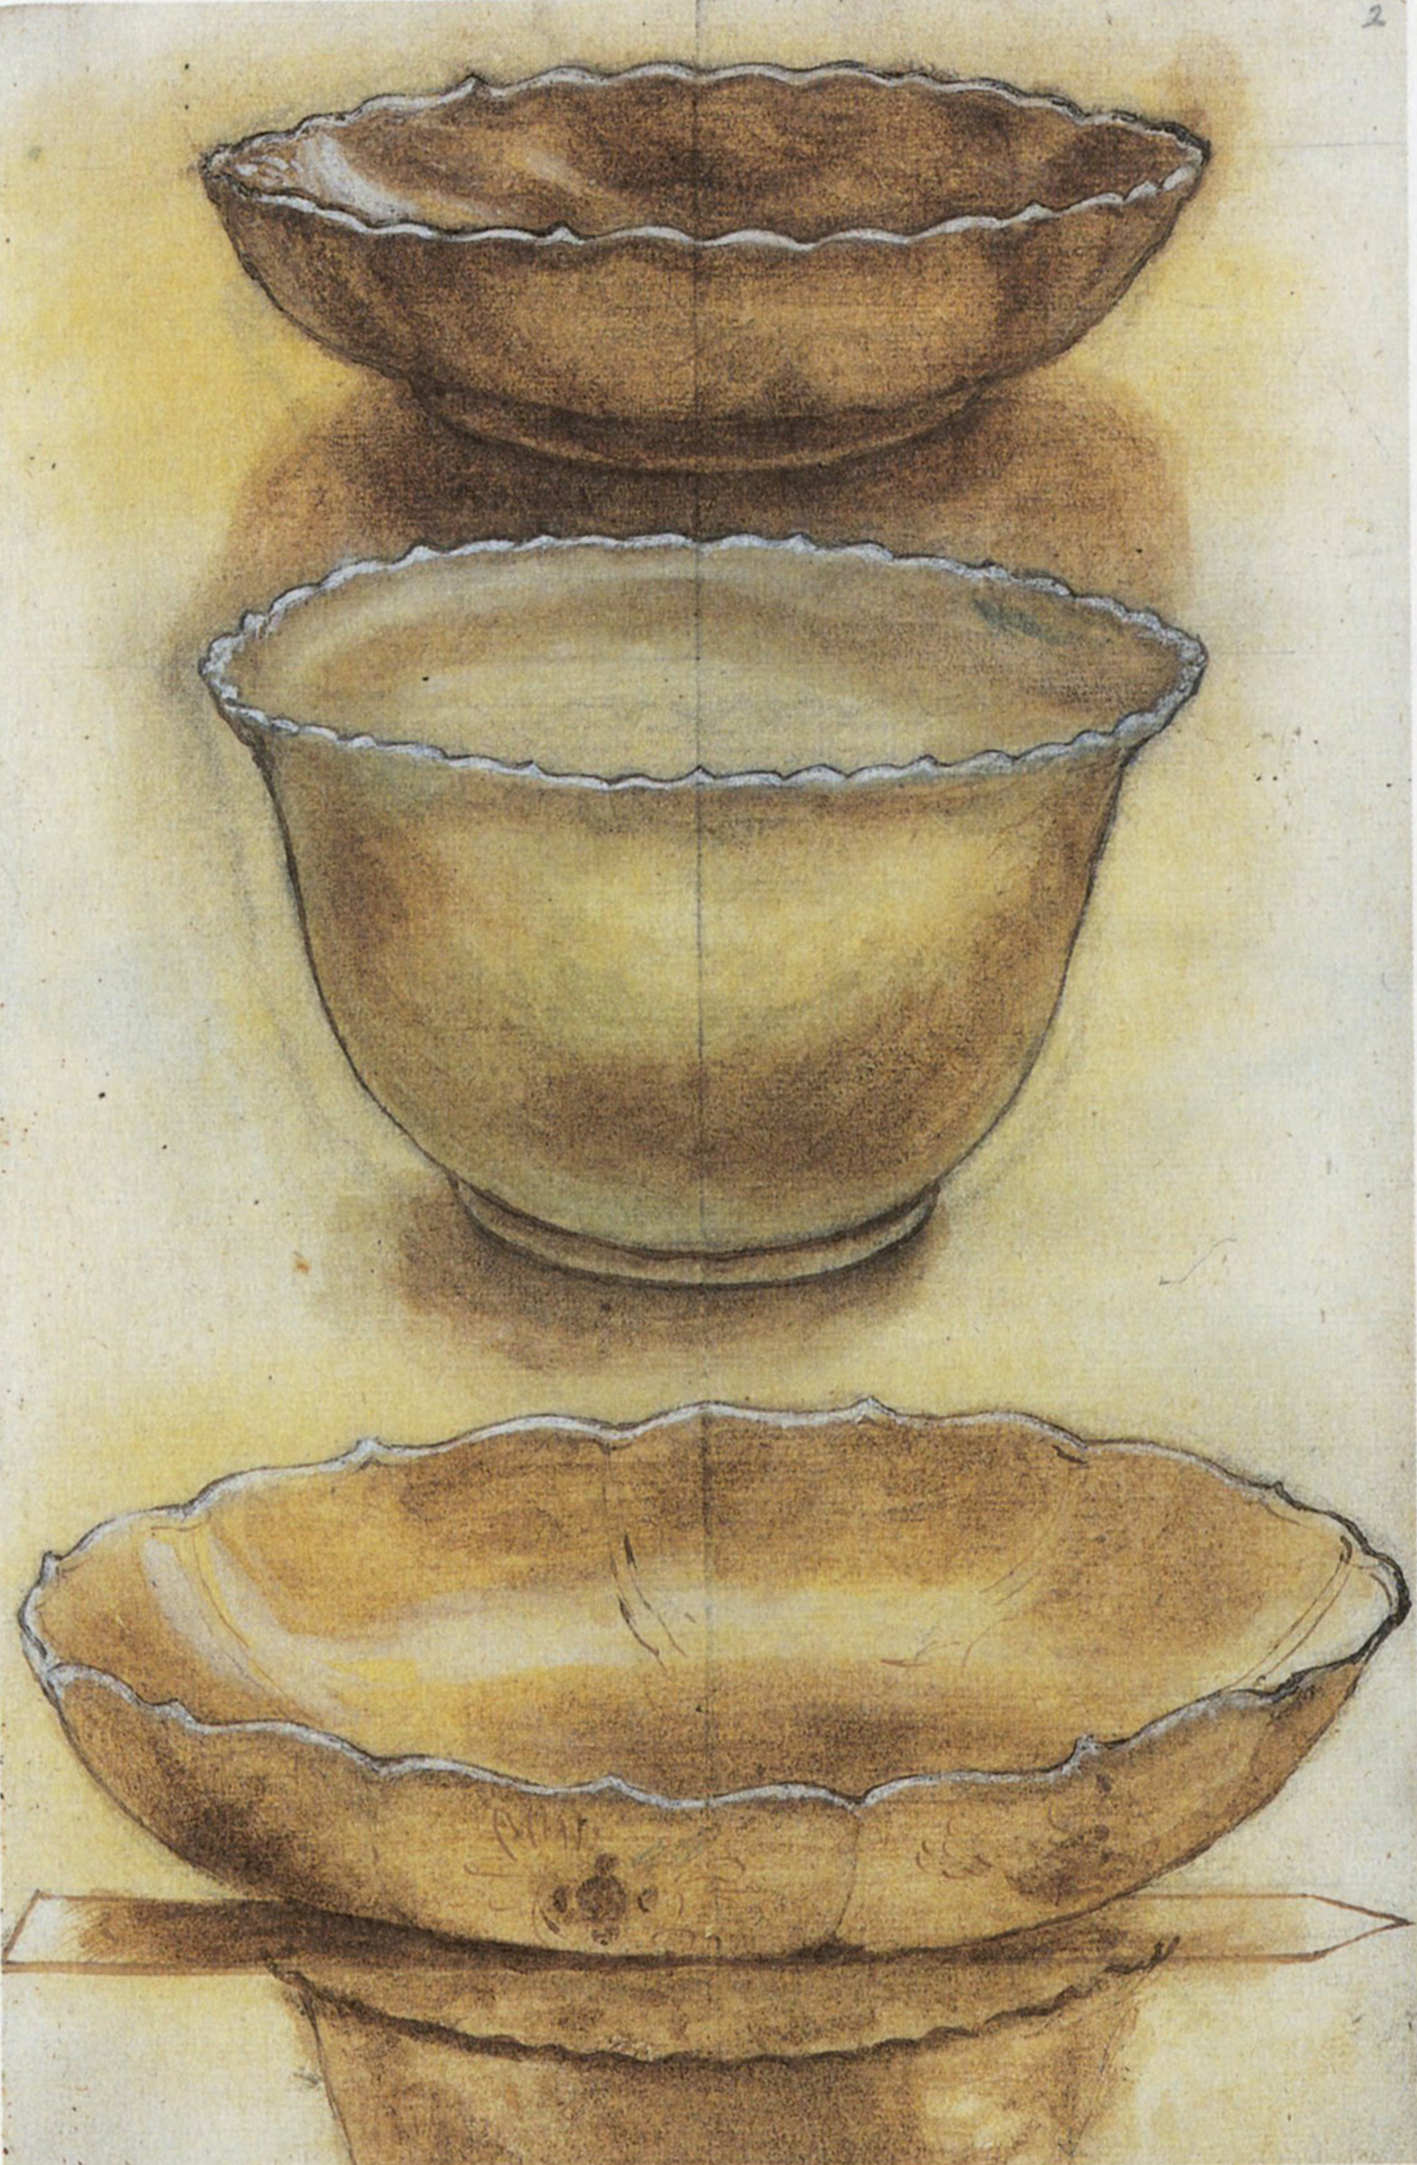 "Figure 10. Arranged porcelain objects, number 136 f. 2r."